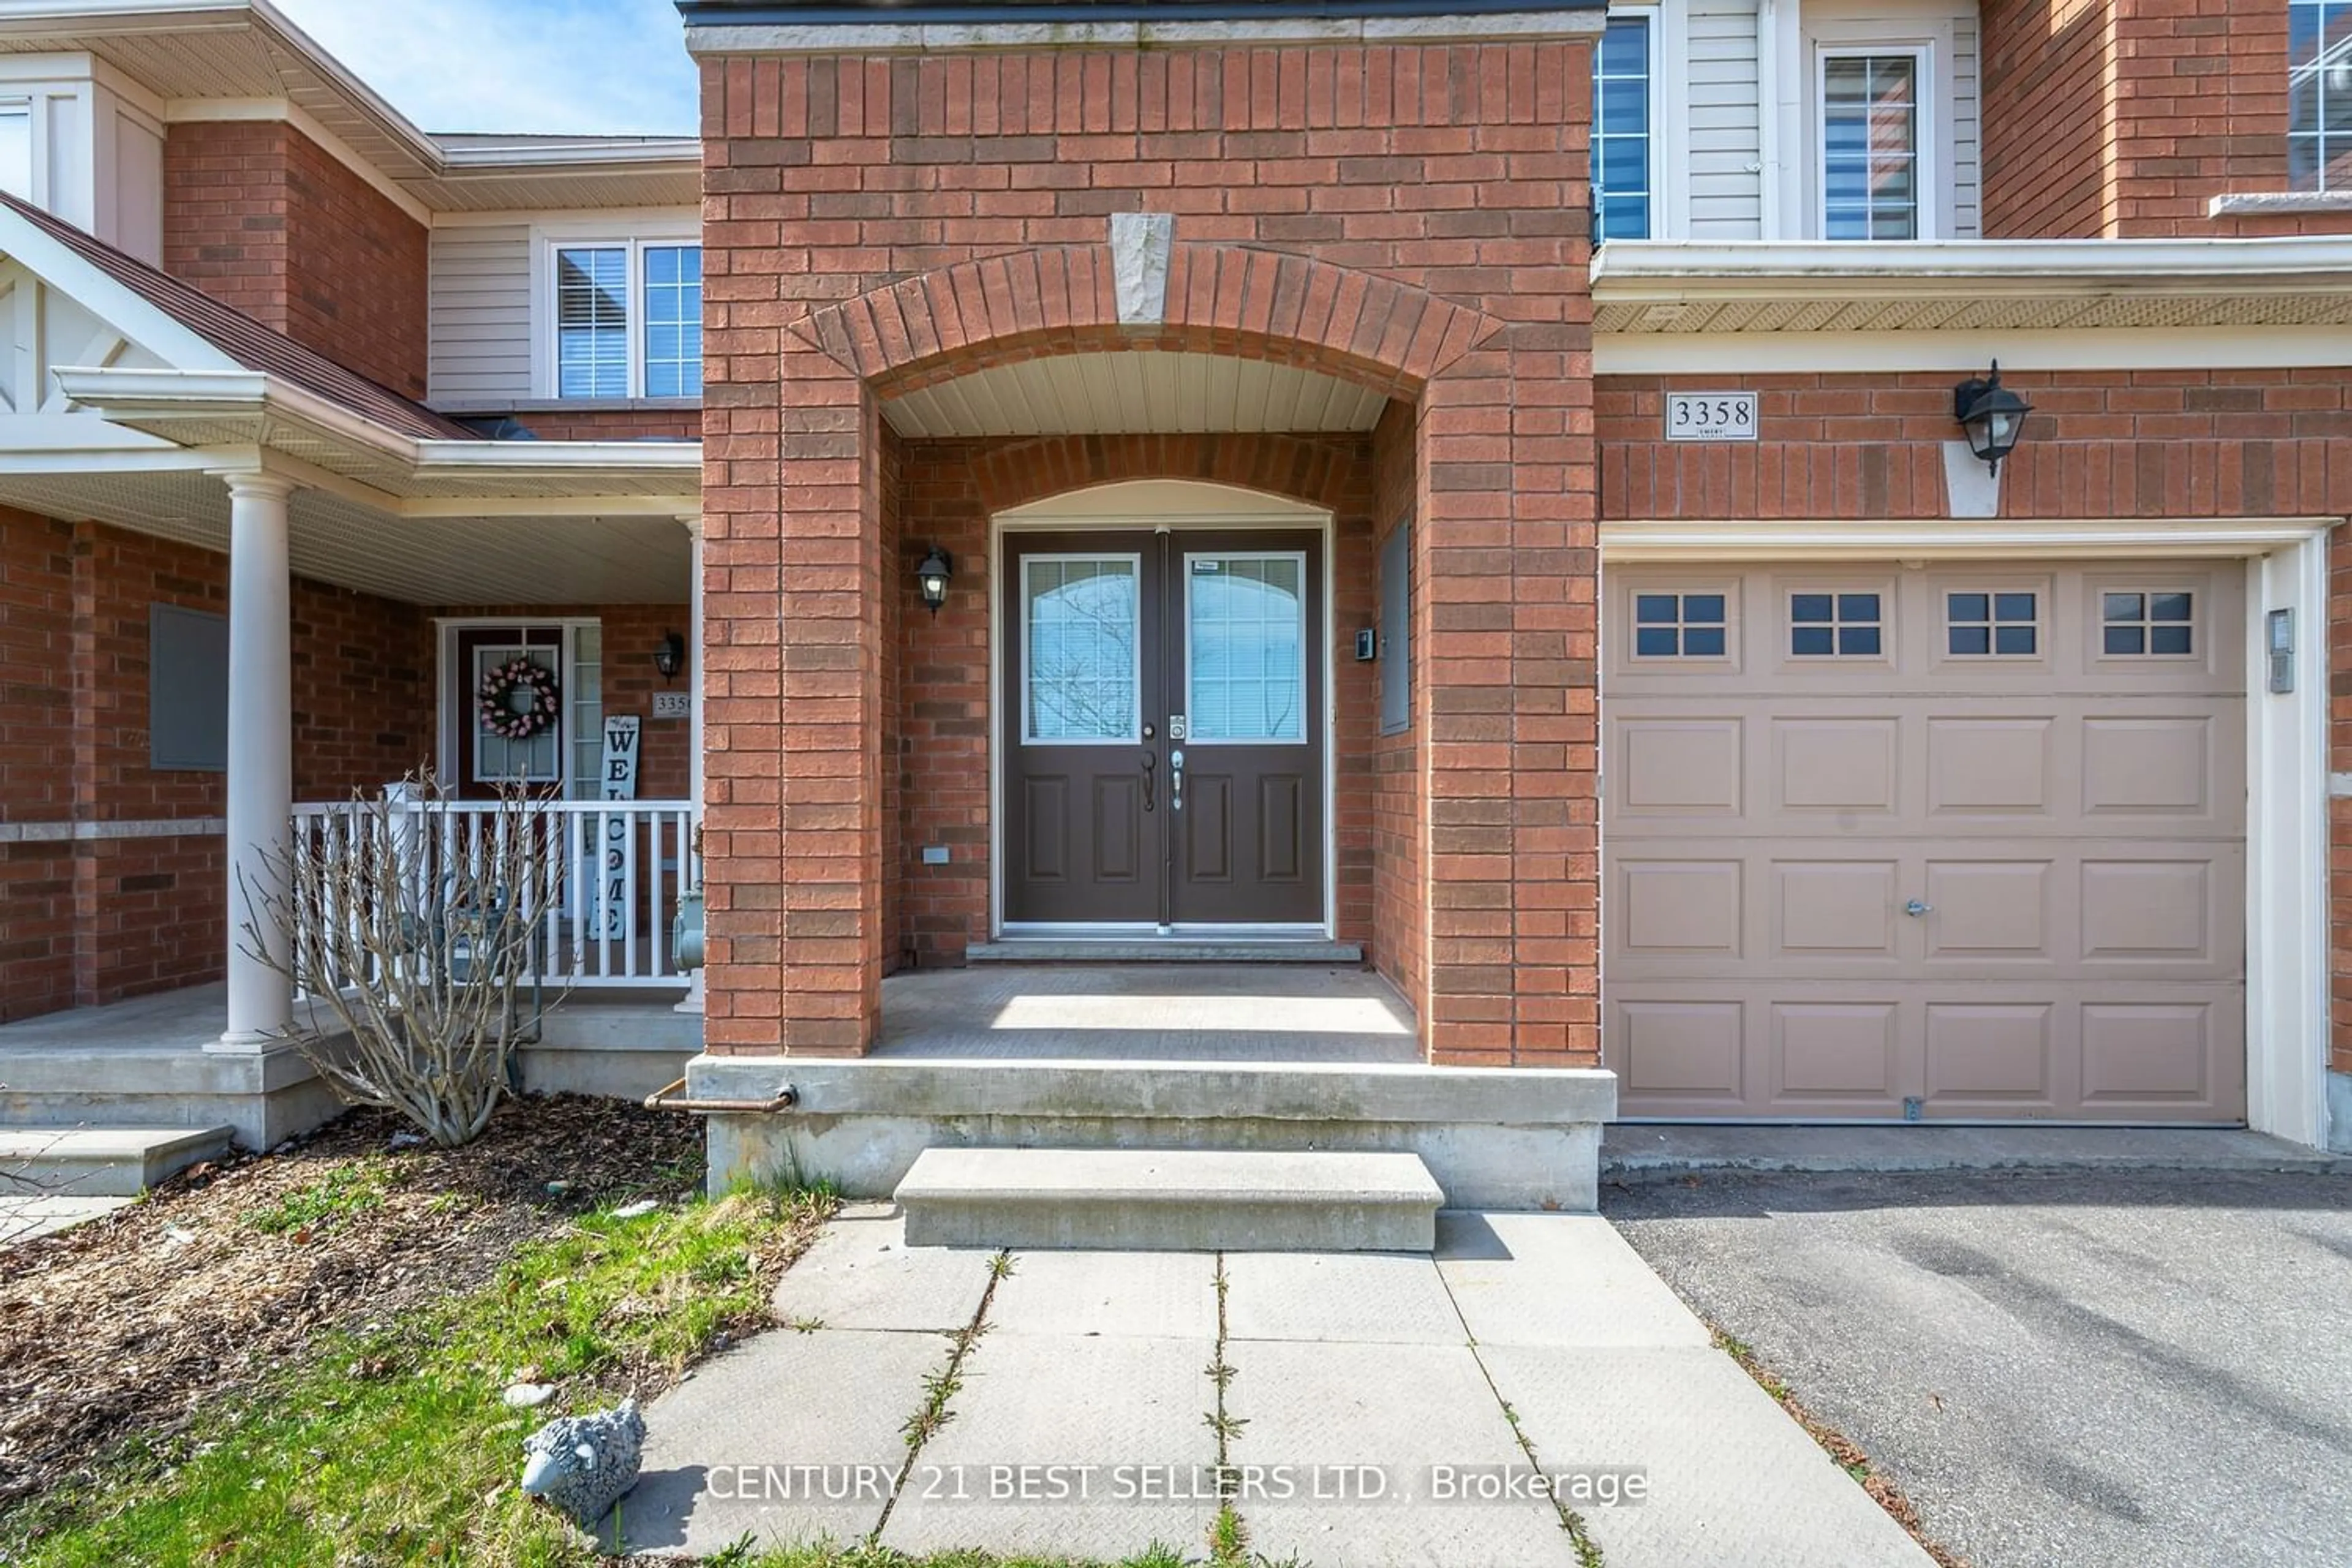 Home with brick exterior material for 3358 Mikalda Rd, Burlington Ontario L7M 0K9